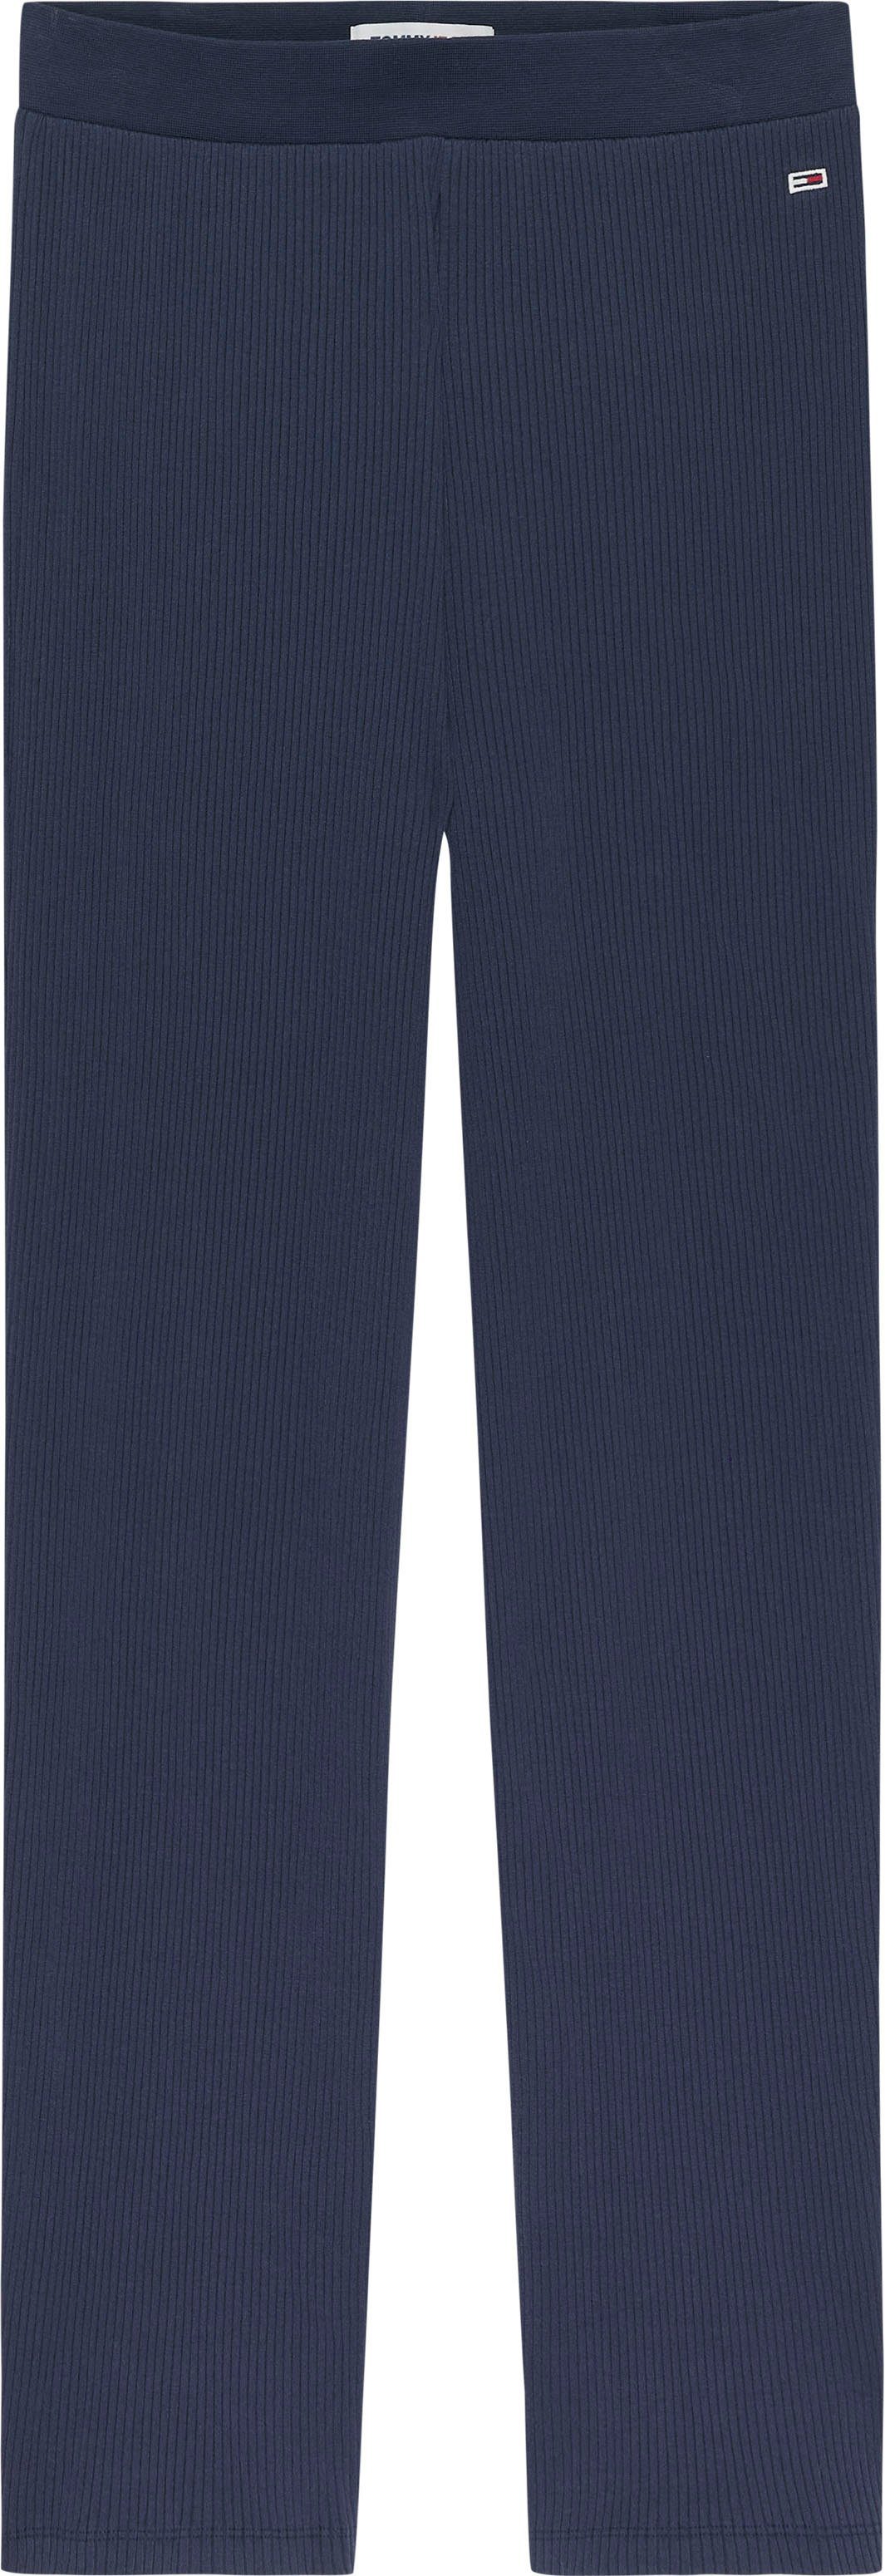 Tommy Jeans Strickhose TJW WIDE mit Jeans Logo-Stickerei marine KNIT PANT Tommy LEG